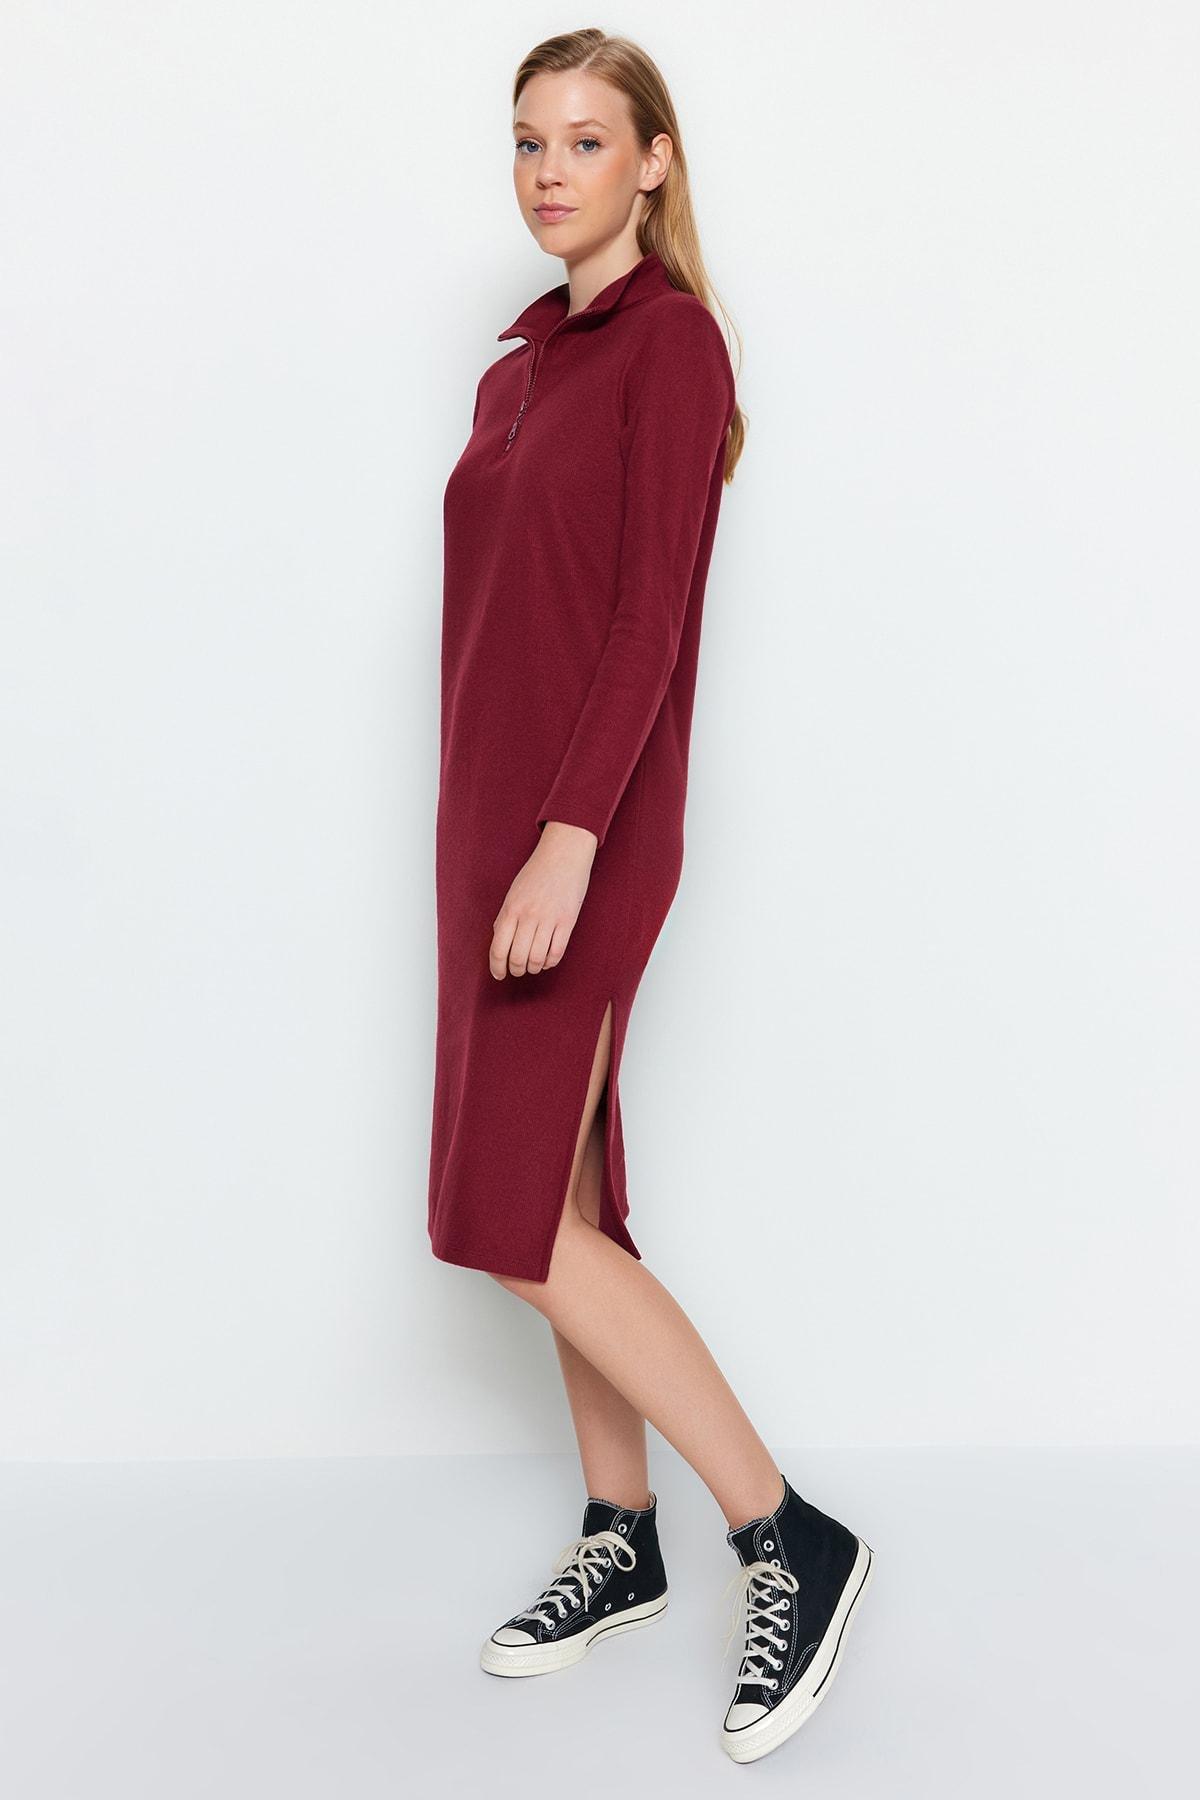 Trendyol - Burgundy Slit Midi Knitted Dress